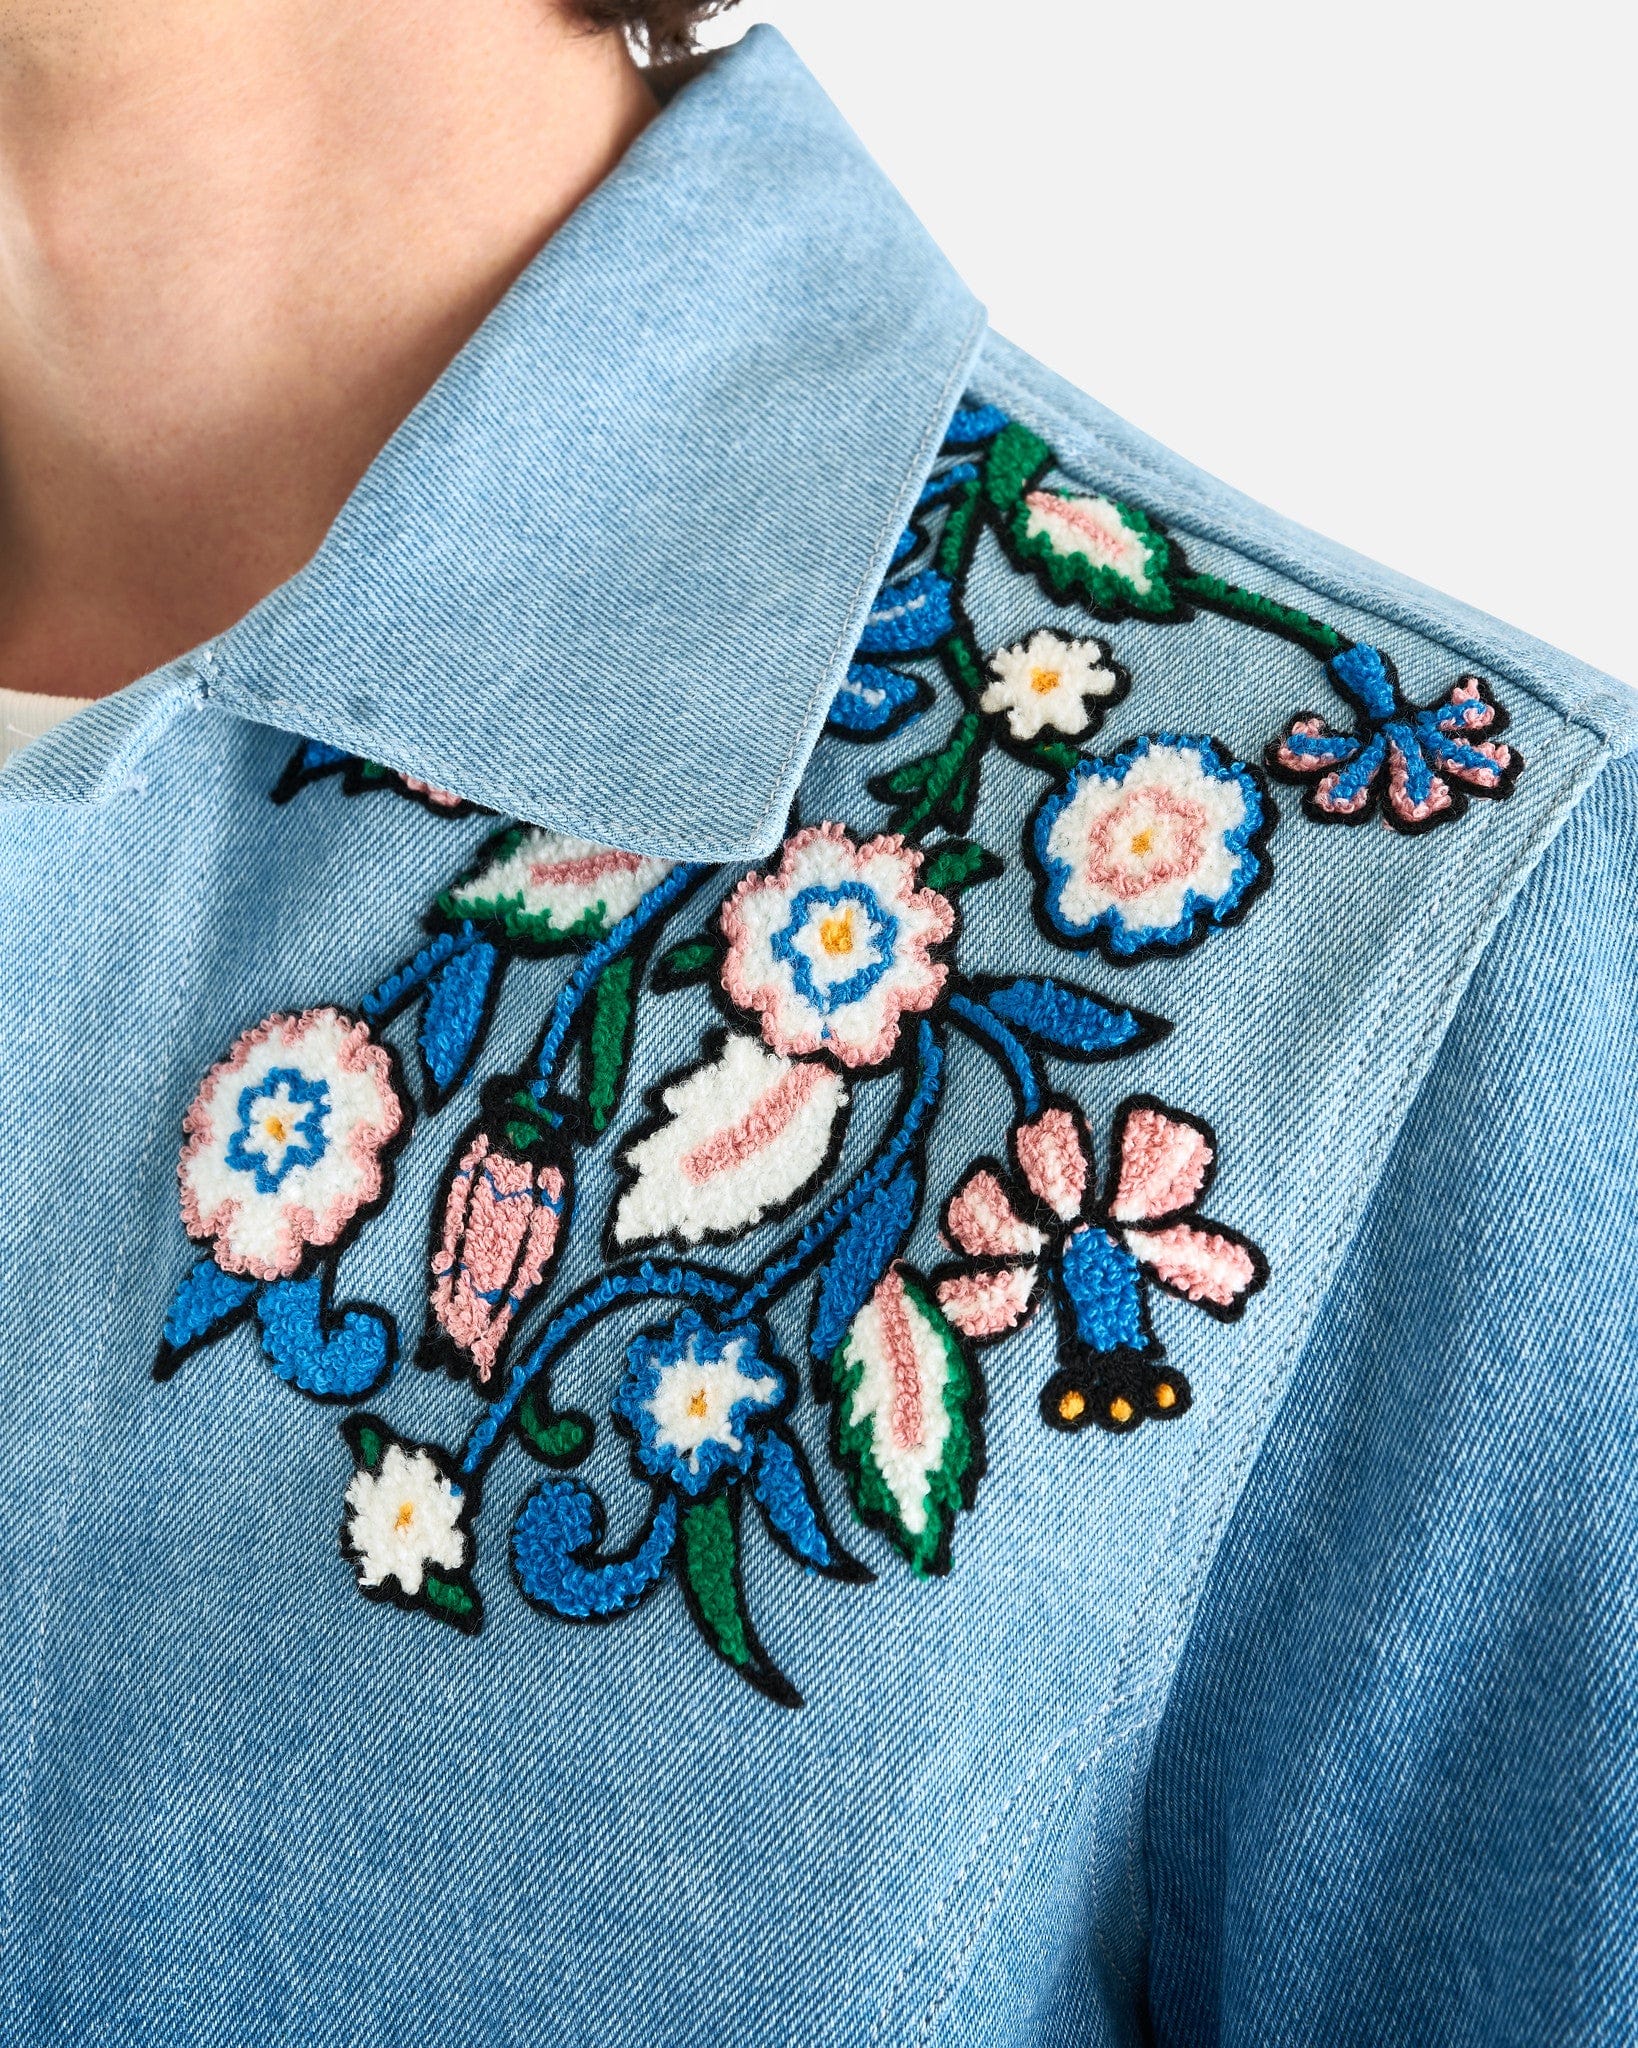 Casablanca Men's Jackets Gradient Floral Embroidery Denim Jacket in Indigo